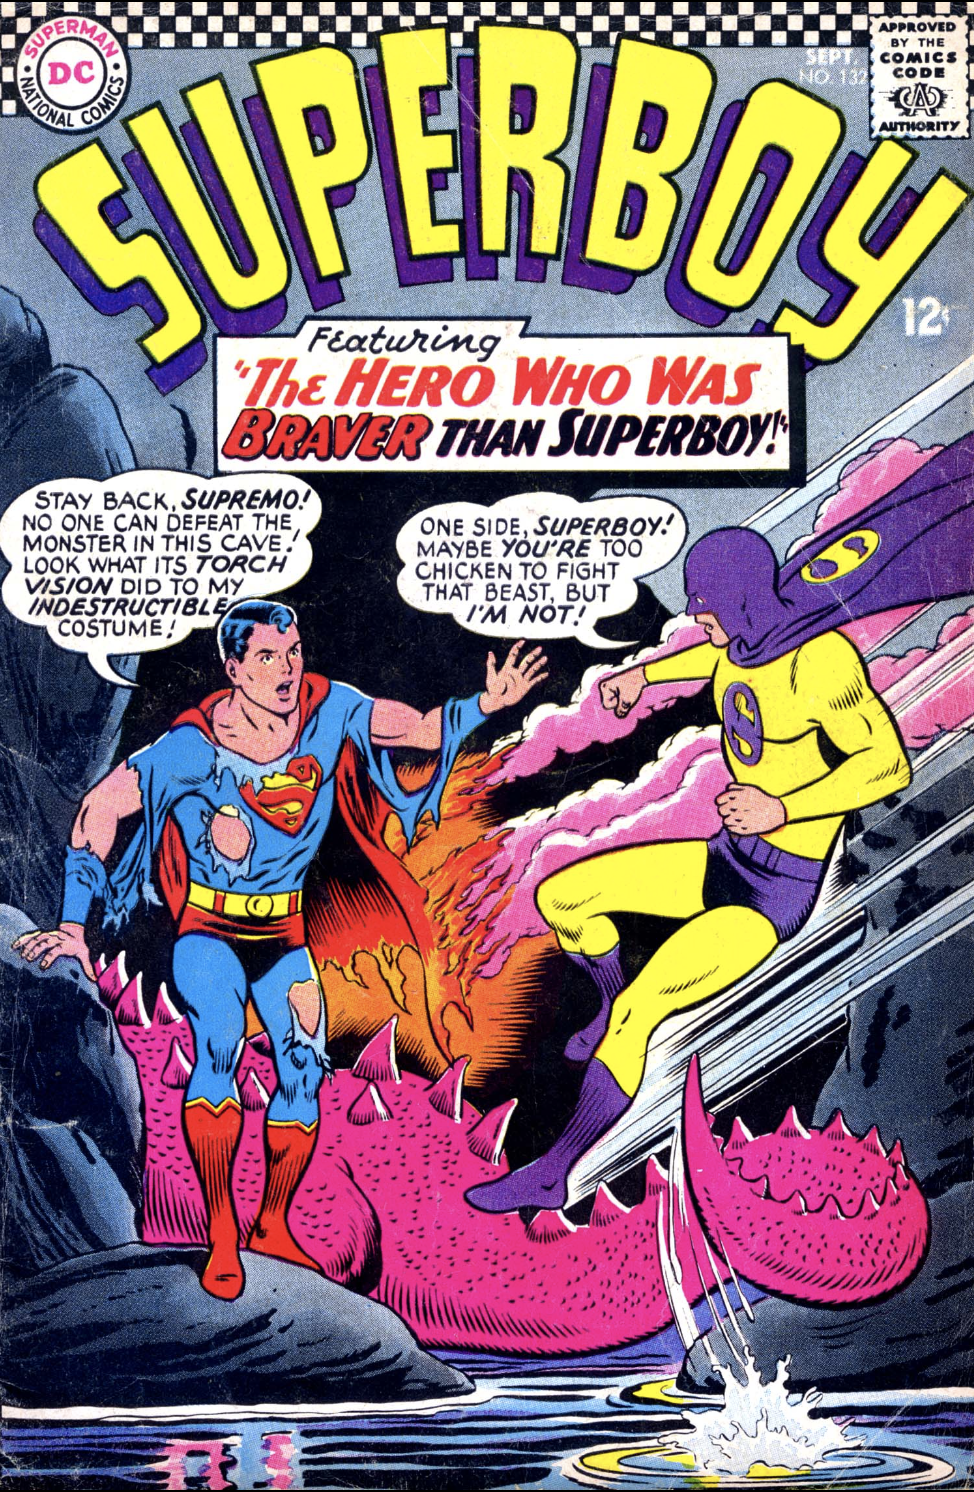 Krypto-Currency (Superboy 132)